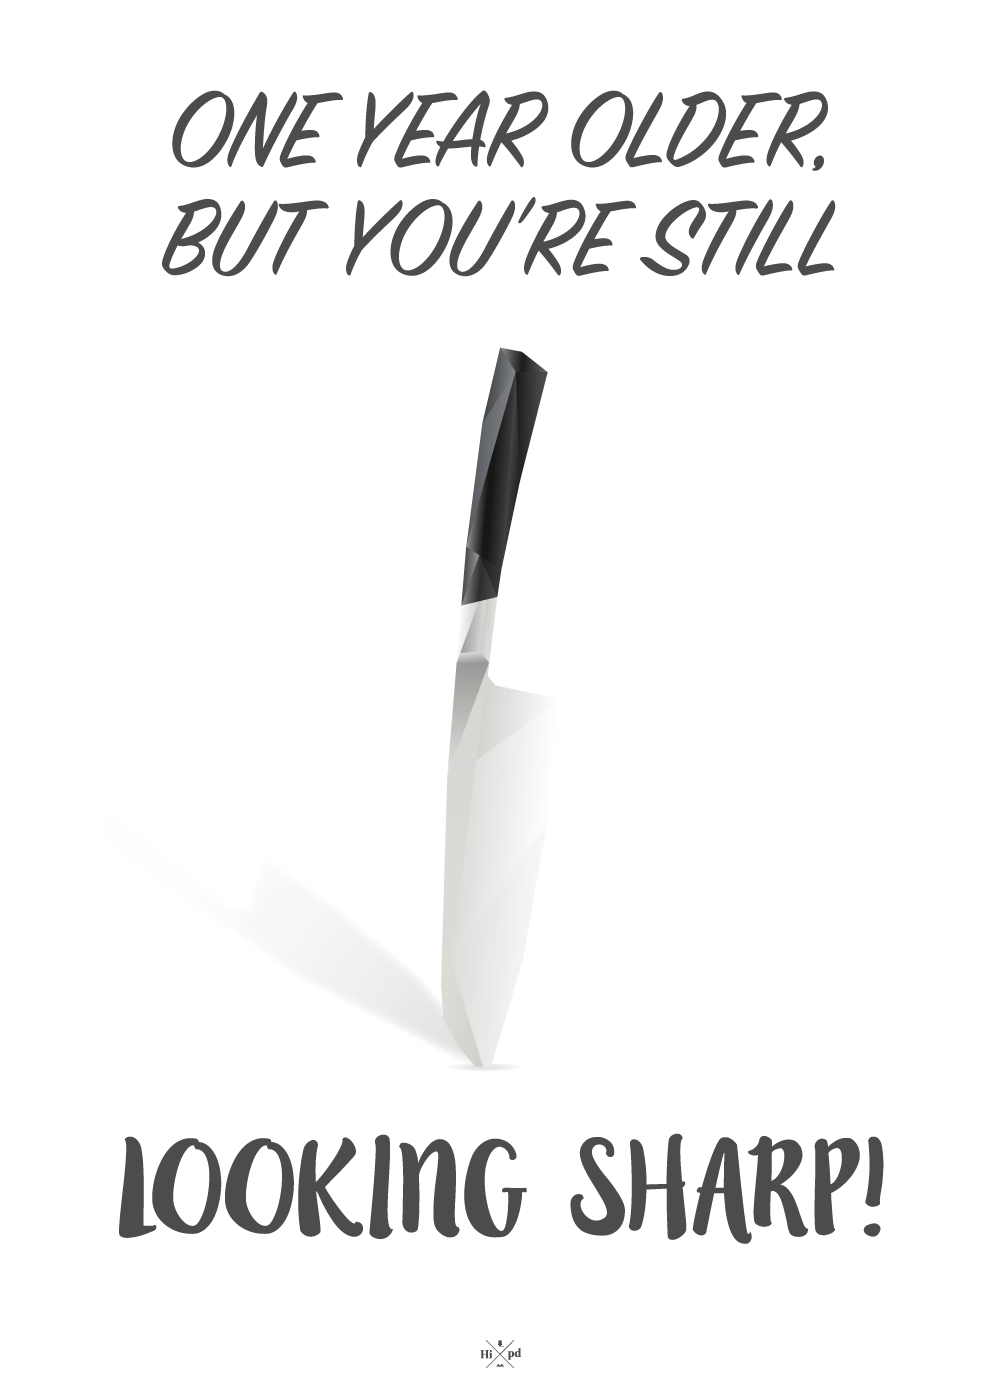 You're still looking sharp